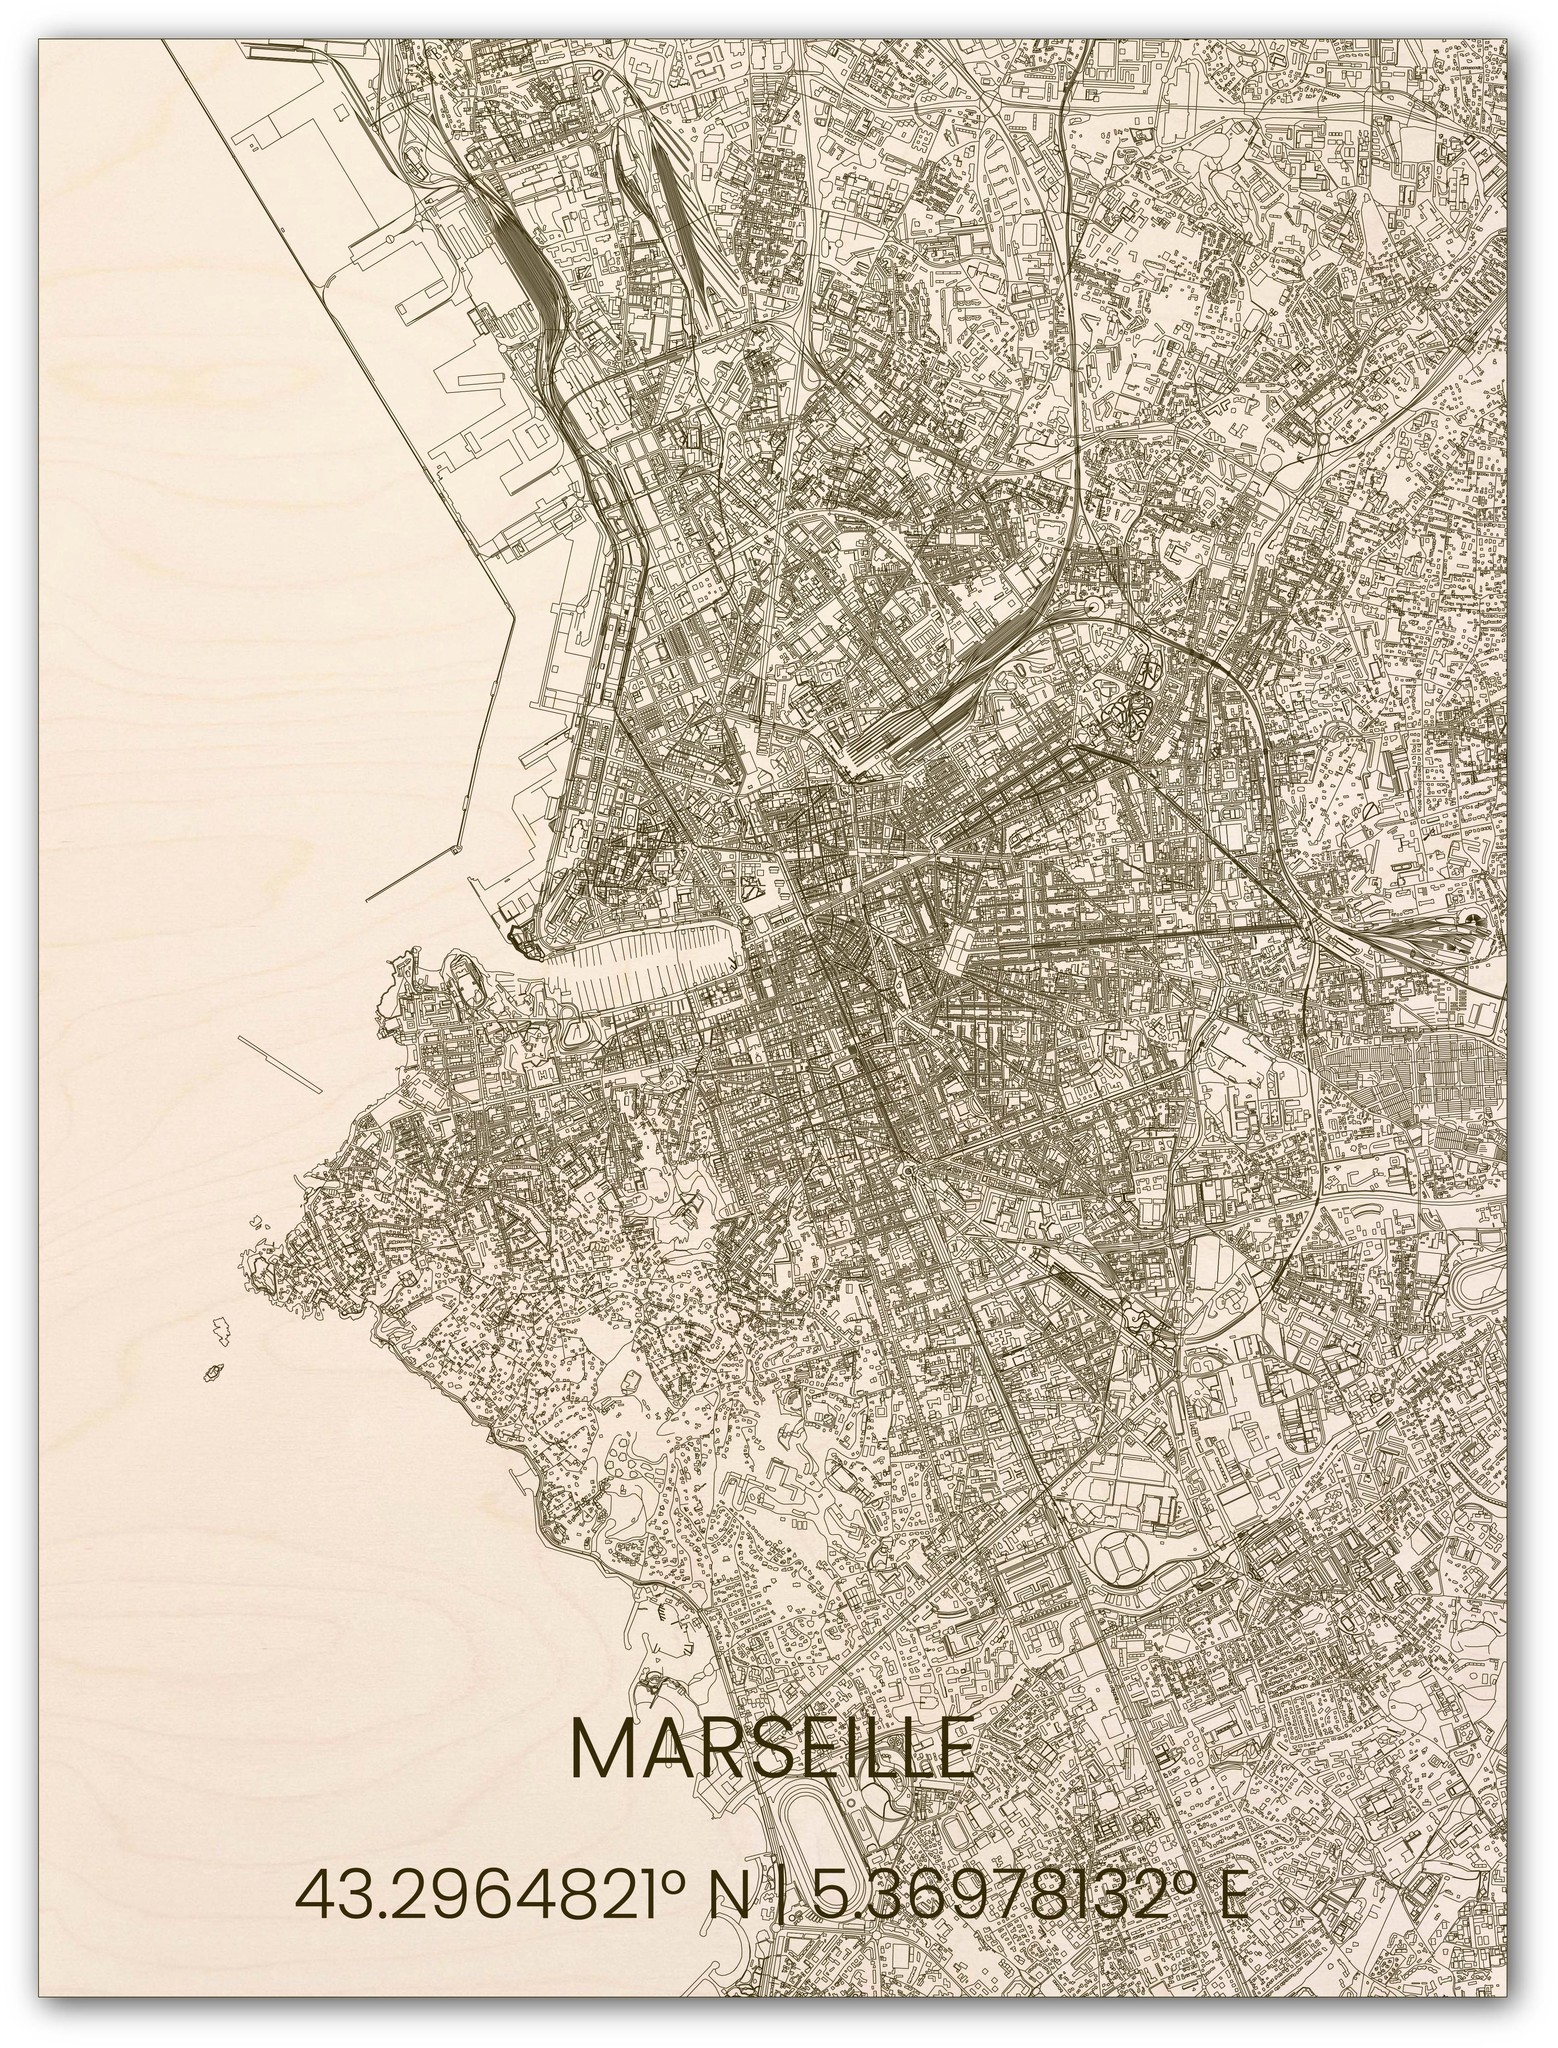 Houten stadsplattegrond Marseille-1